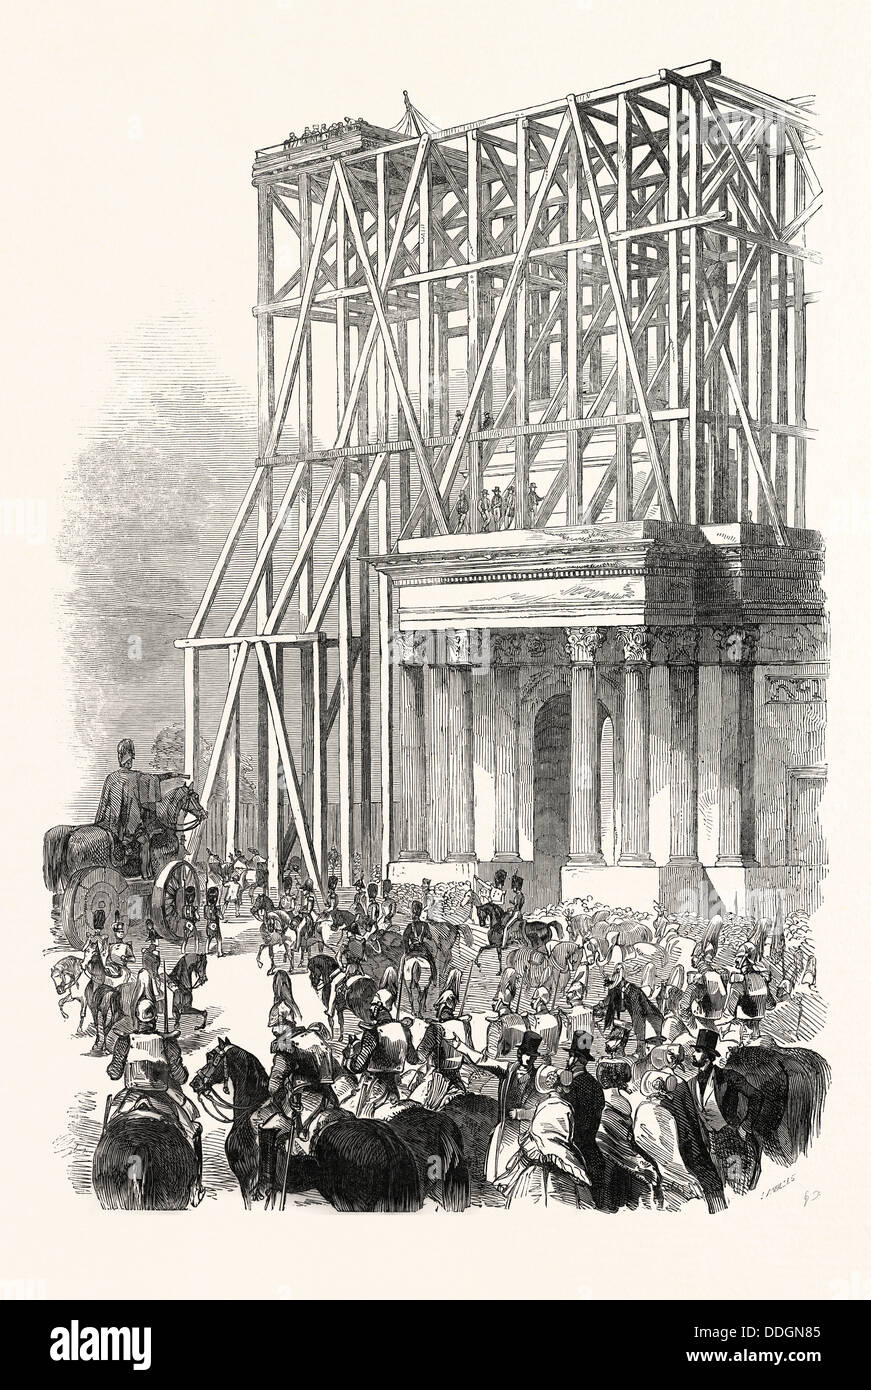 La llegada de la estatua en el arco de Wellington, 1846 Foto de stock